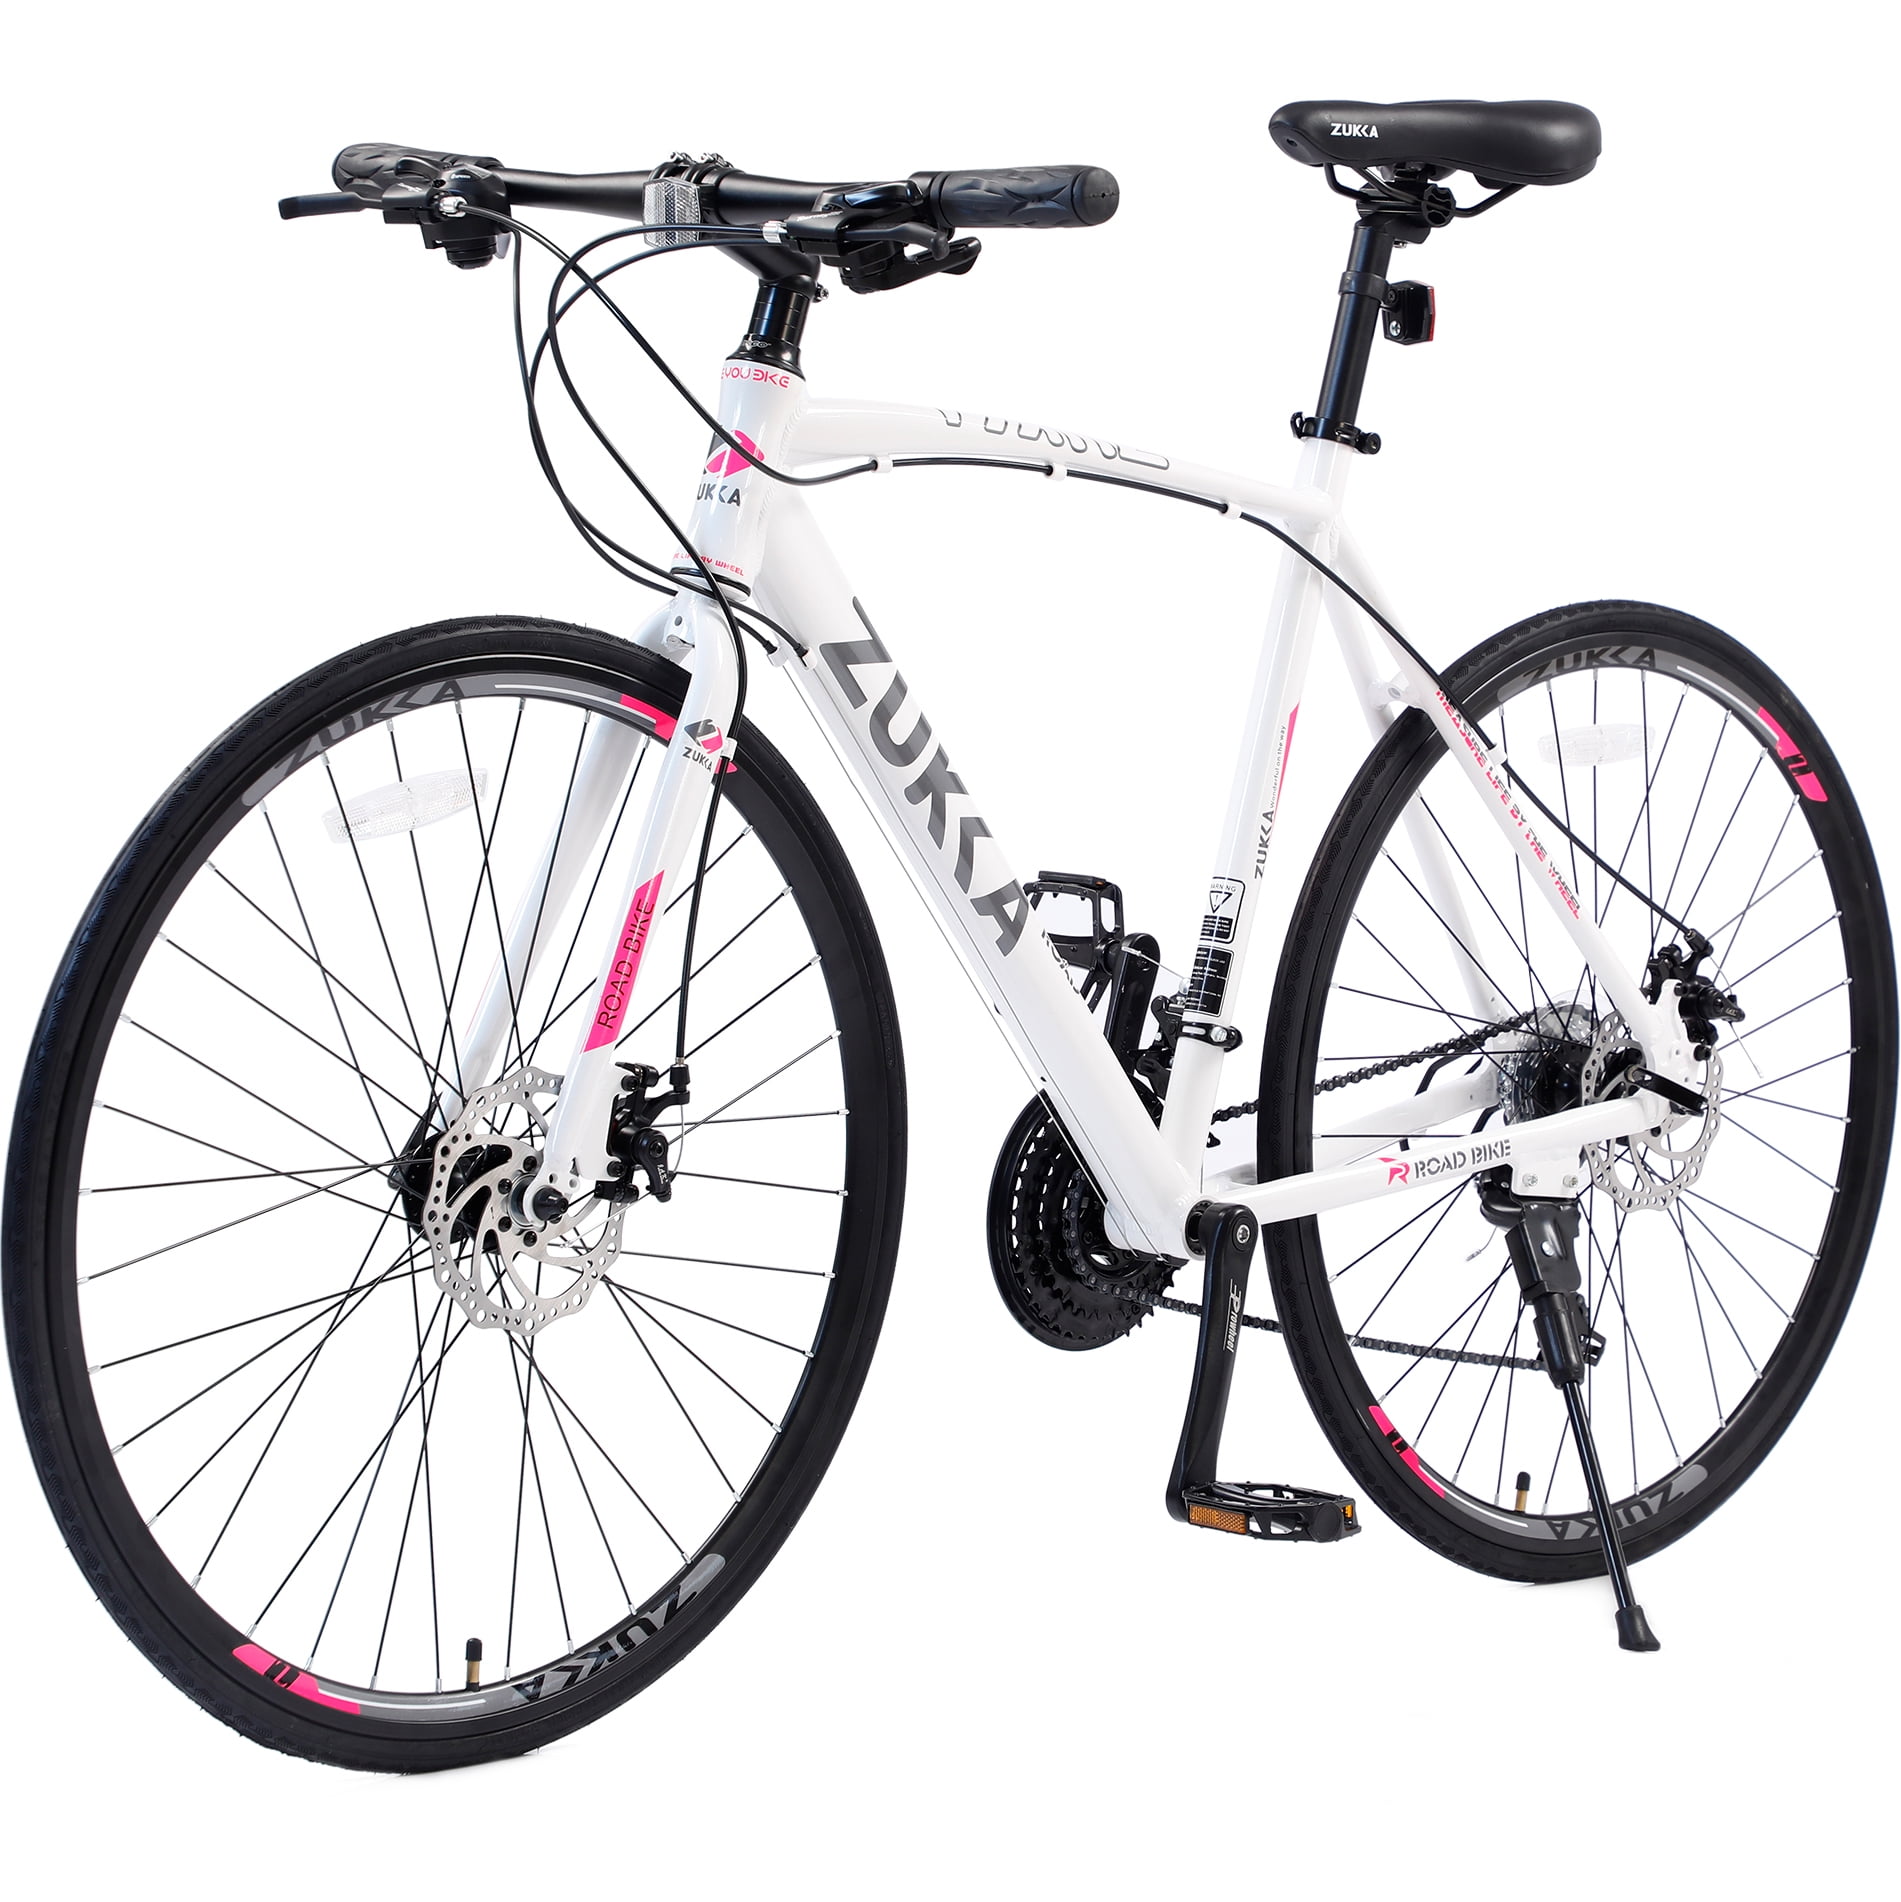 24 Speed Road Bike for Men Women, 700C Aluminum Flat Bar Road Bike with Disc Brakes, White - image 1 of 6